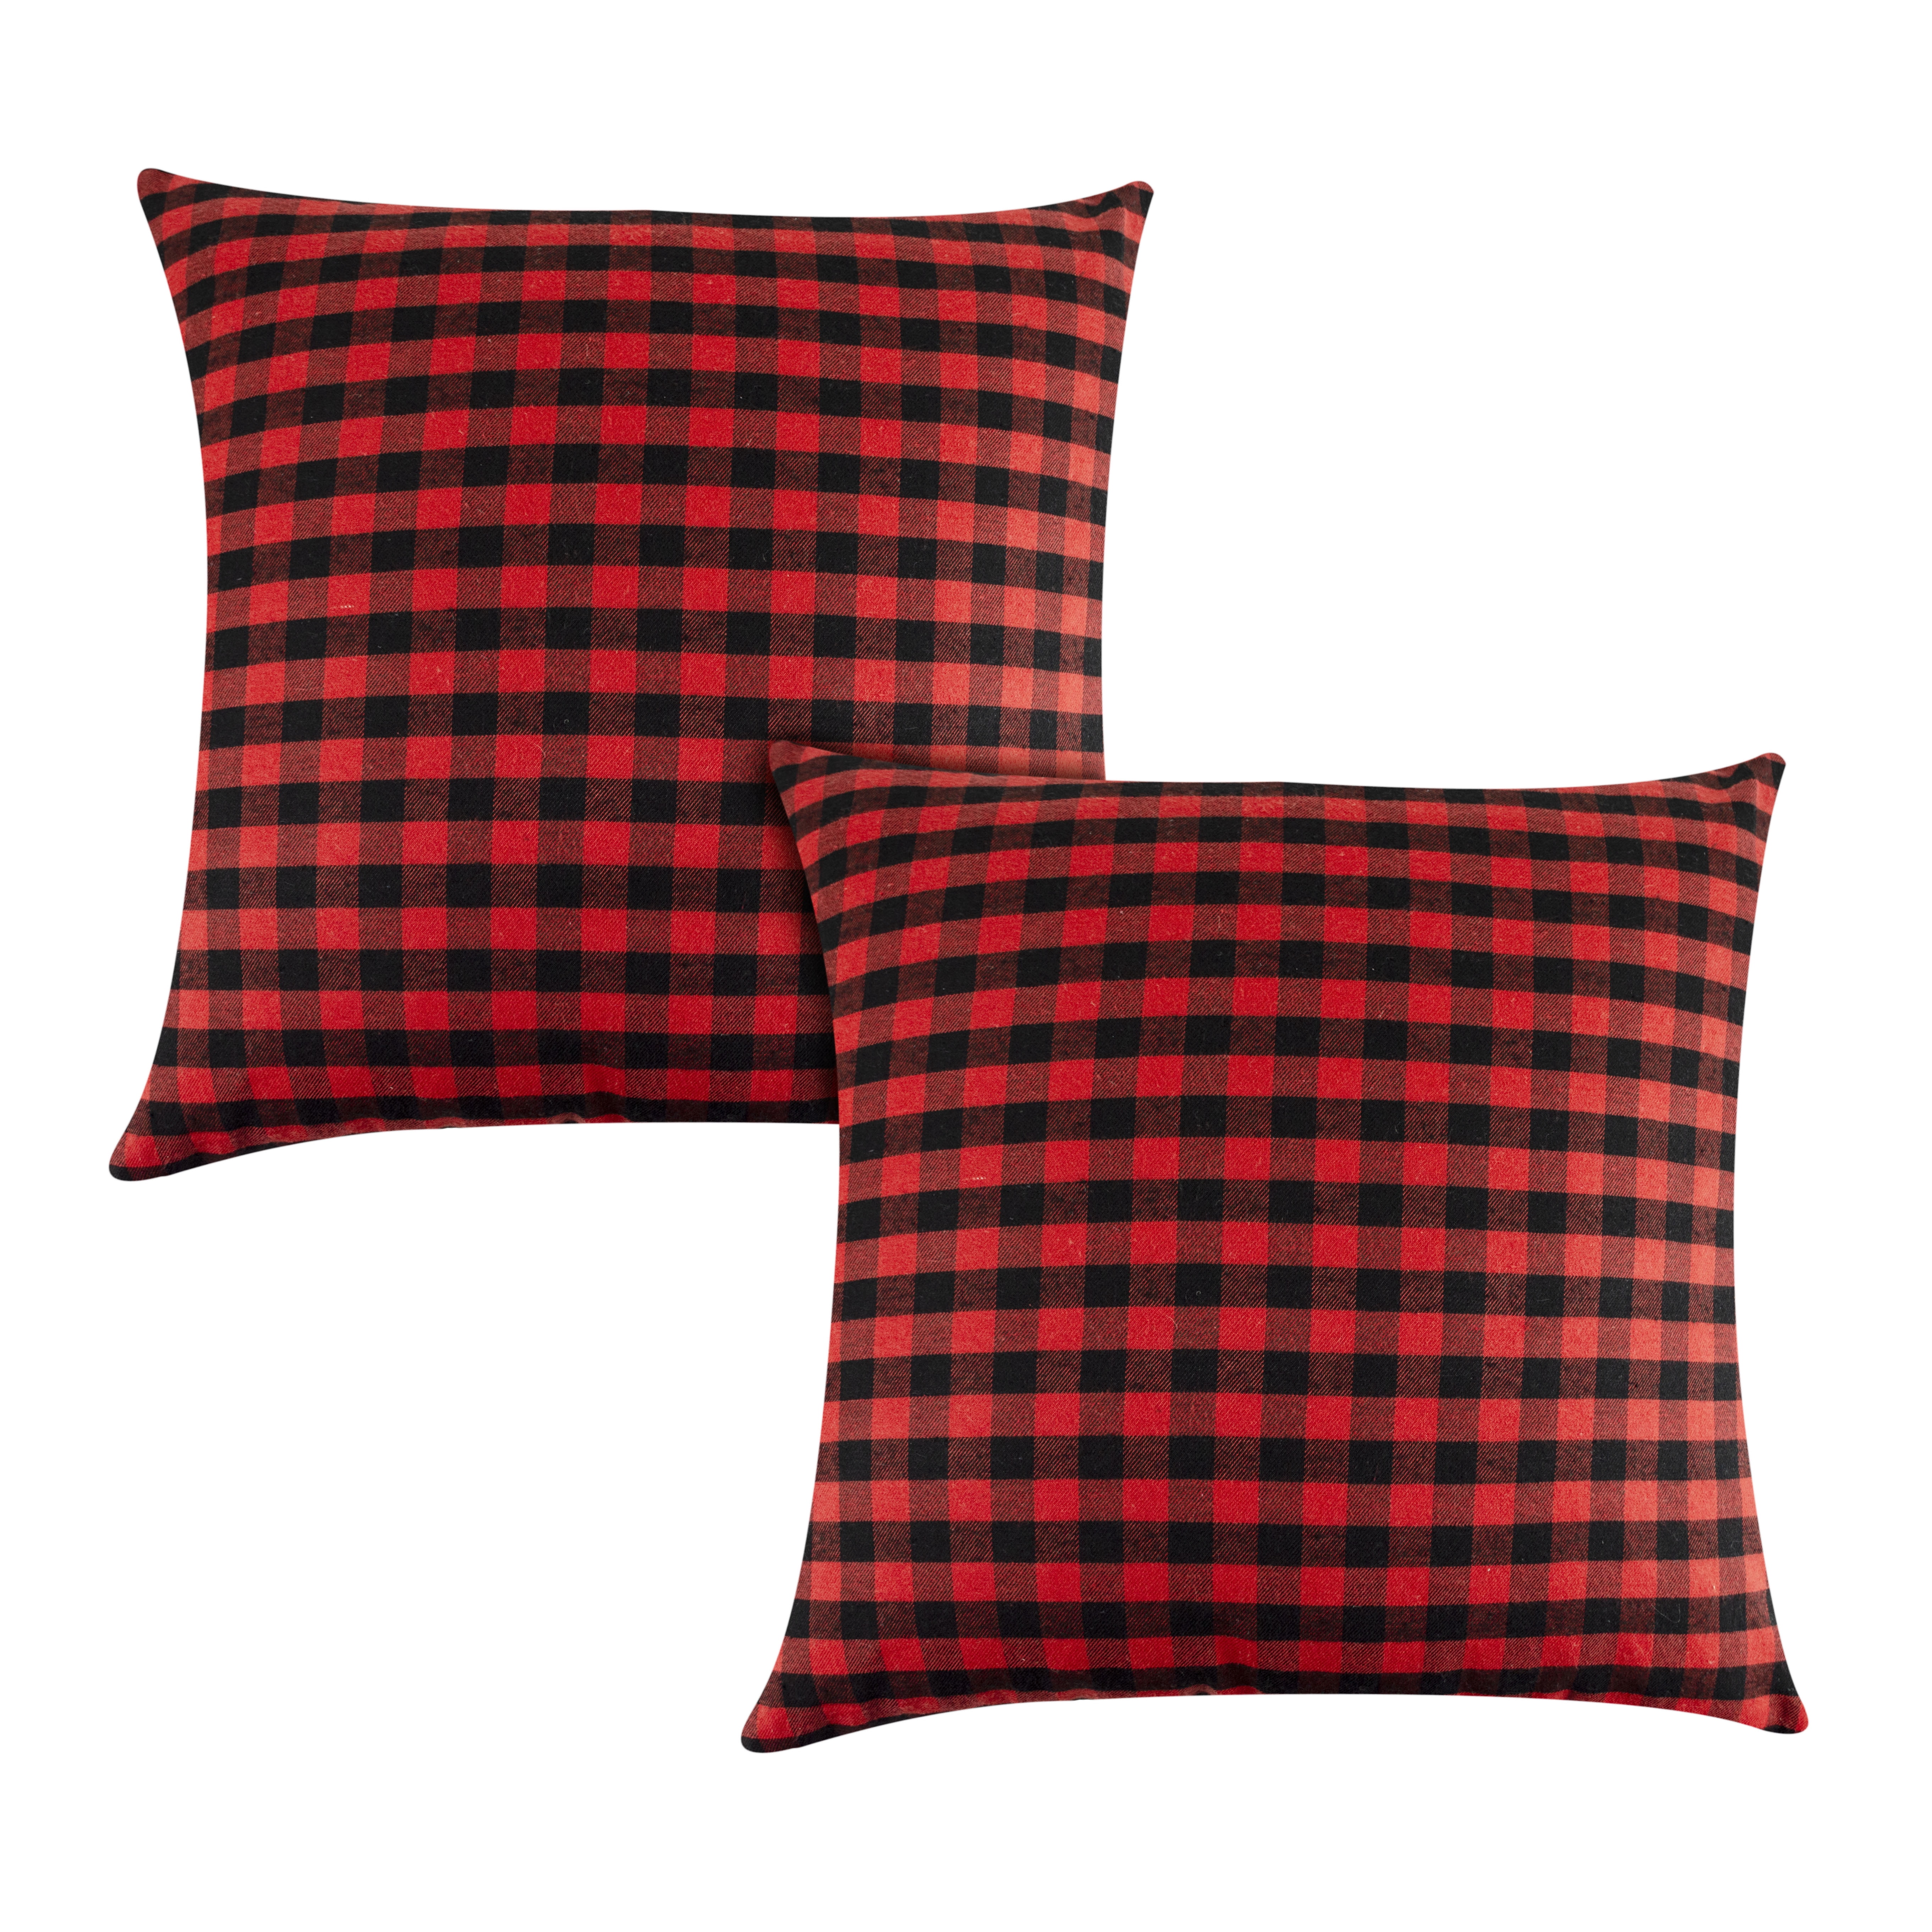 Set of 2 Tartan Plaid Decorative Throw Pillow Cushion Covers  Red Black White